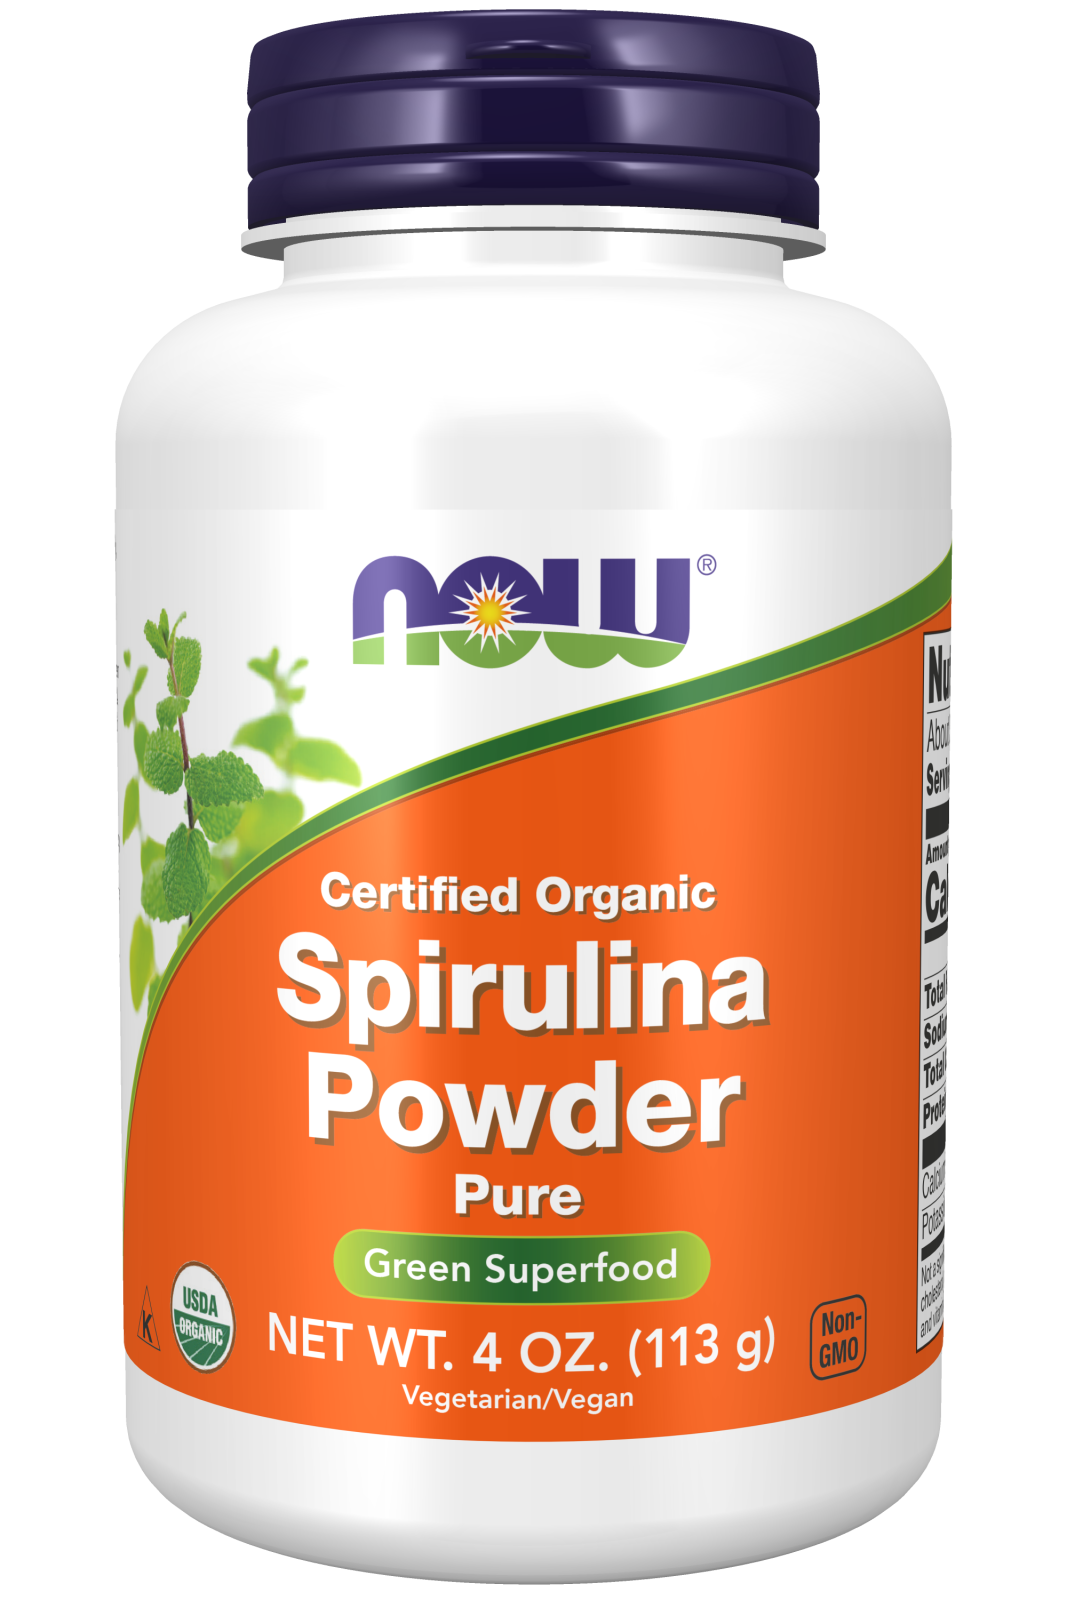 Spirulina Powder Green Superfood